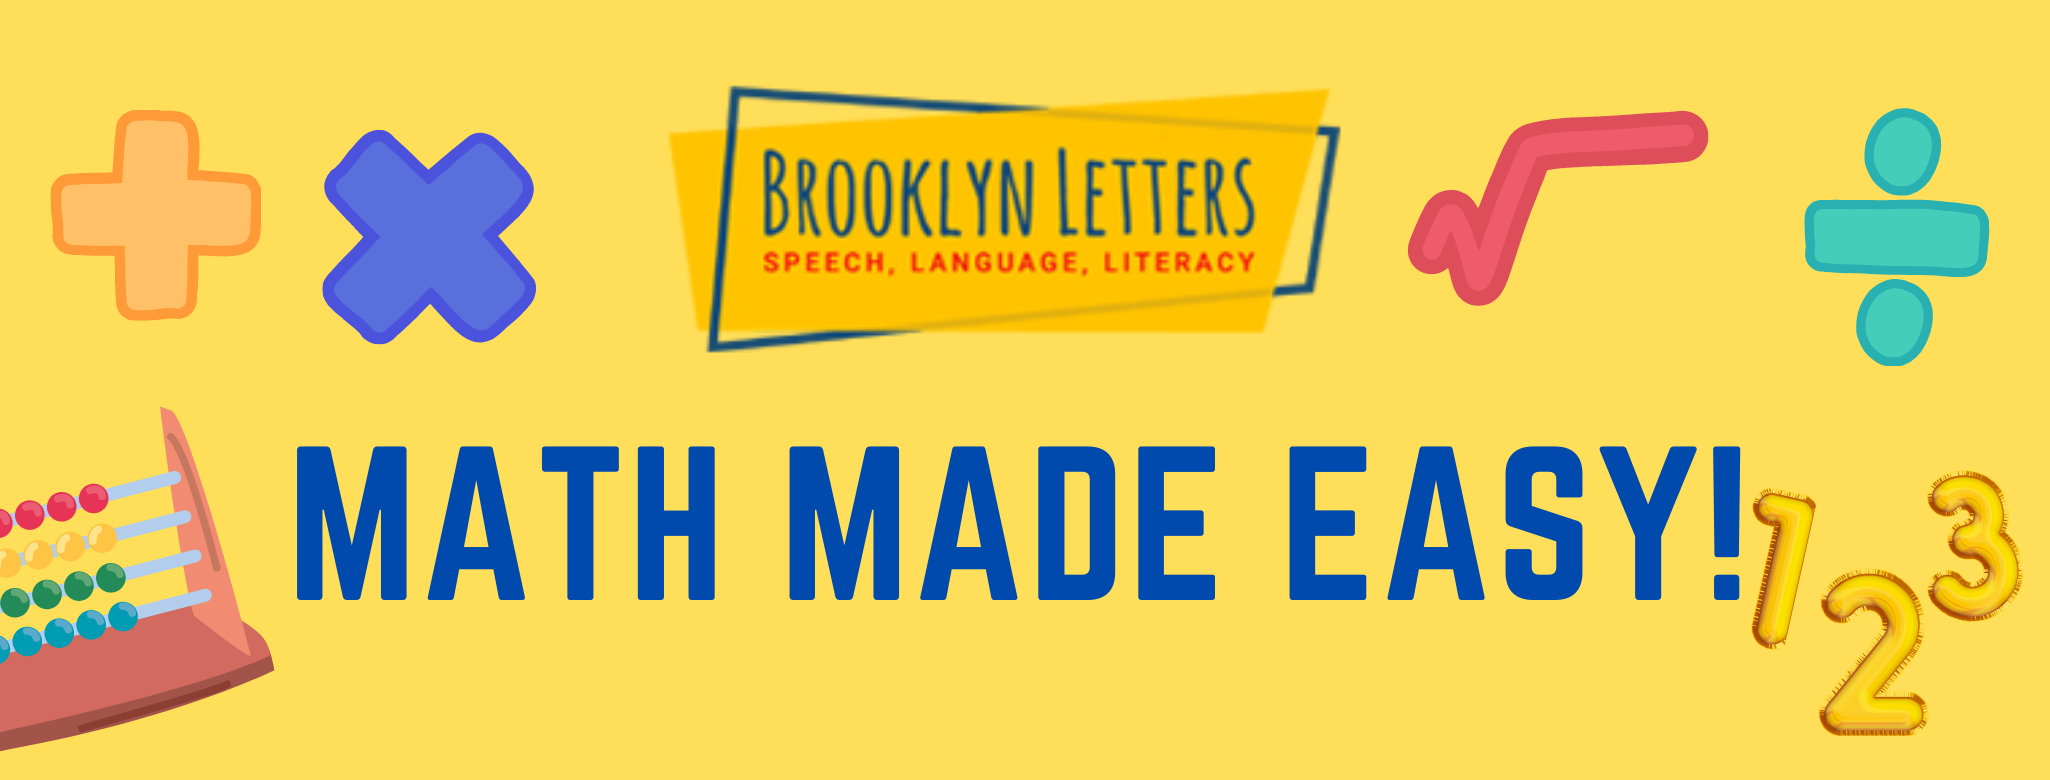 Math Topics, Brooklyn Letters